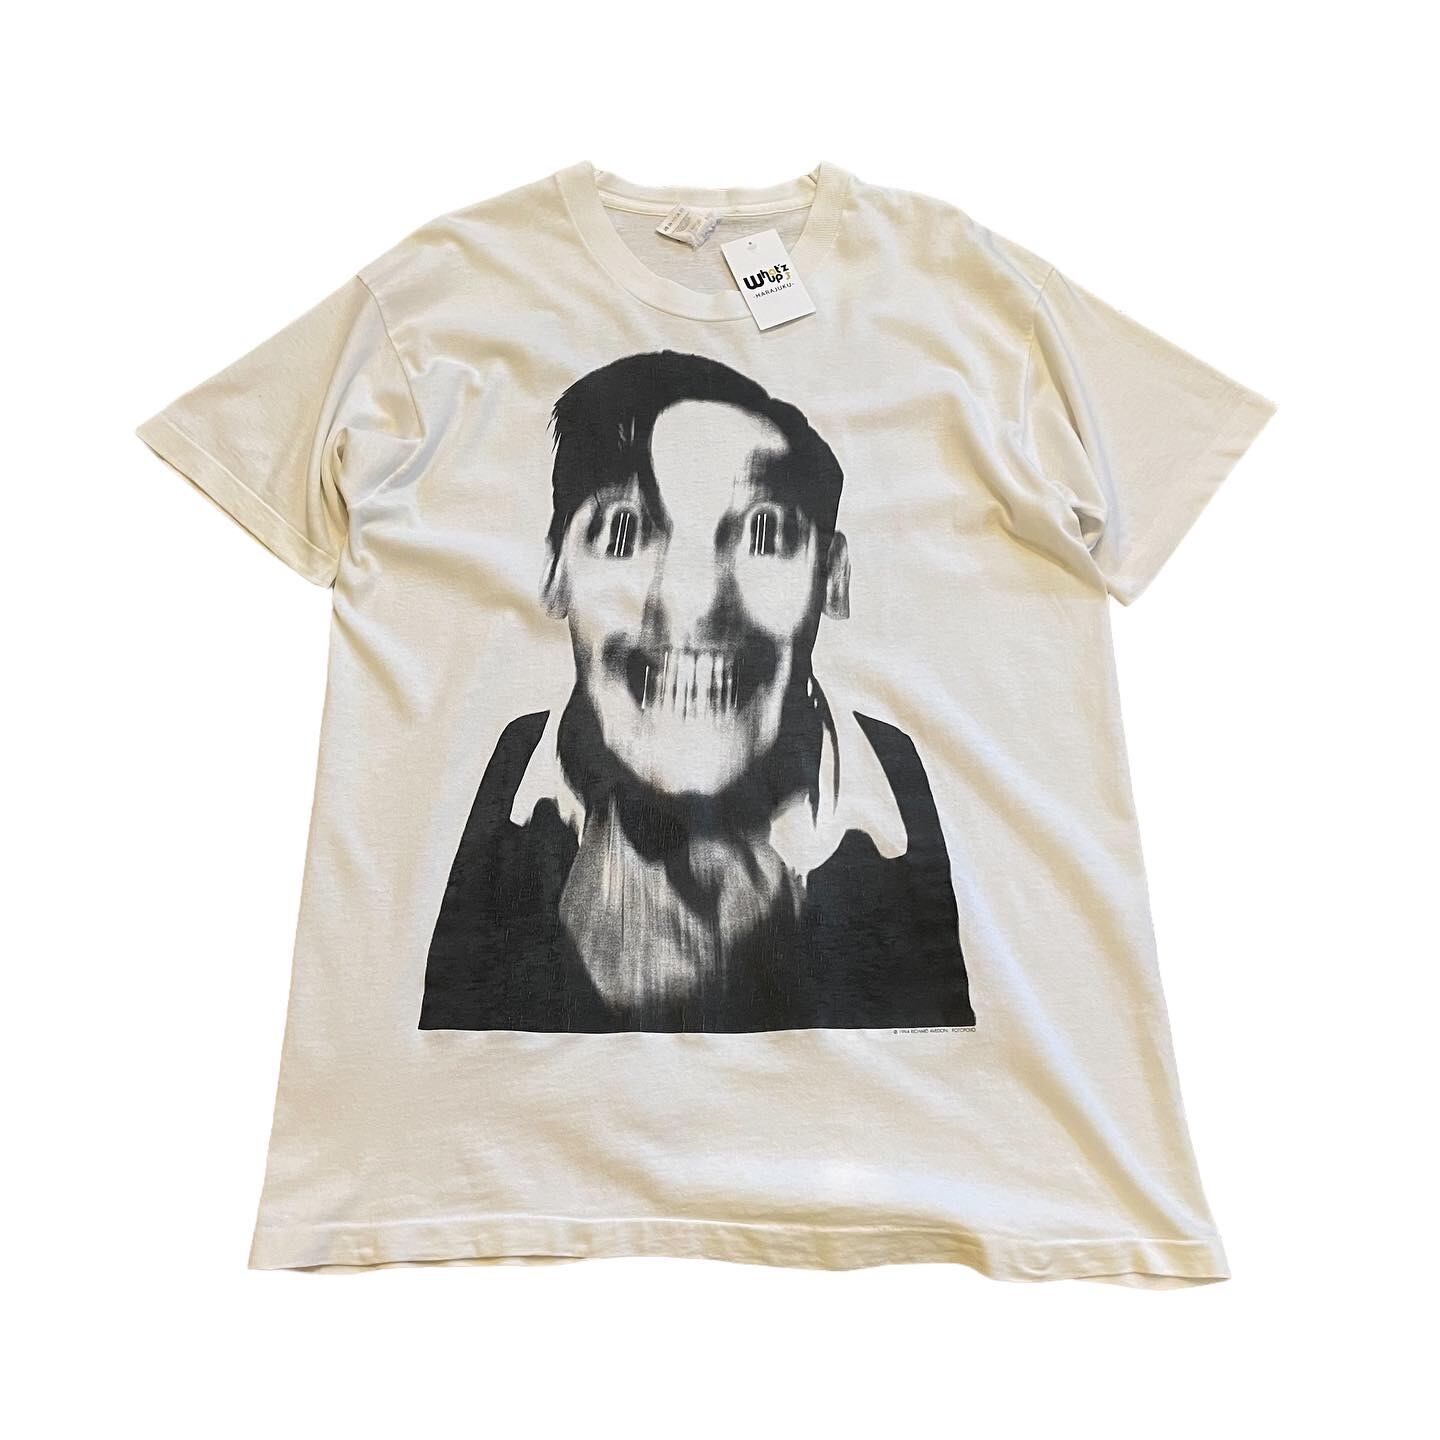 1994s Richard Avedon photo T-shirt | What'z up